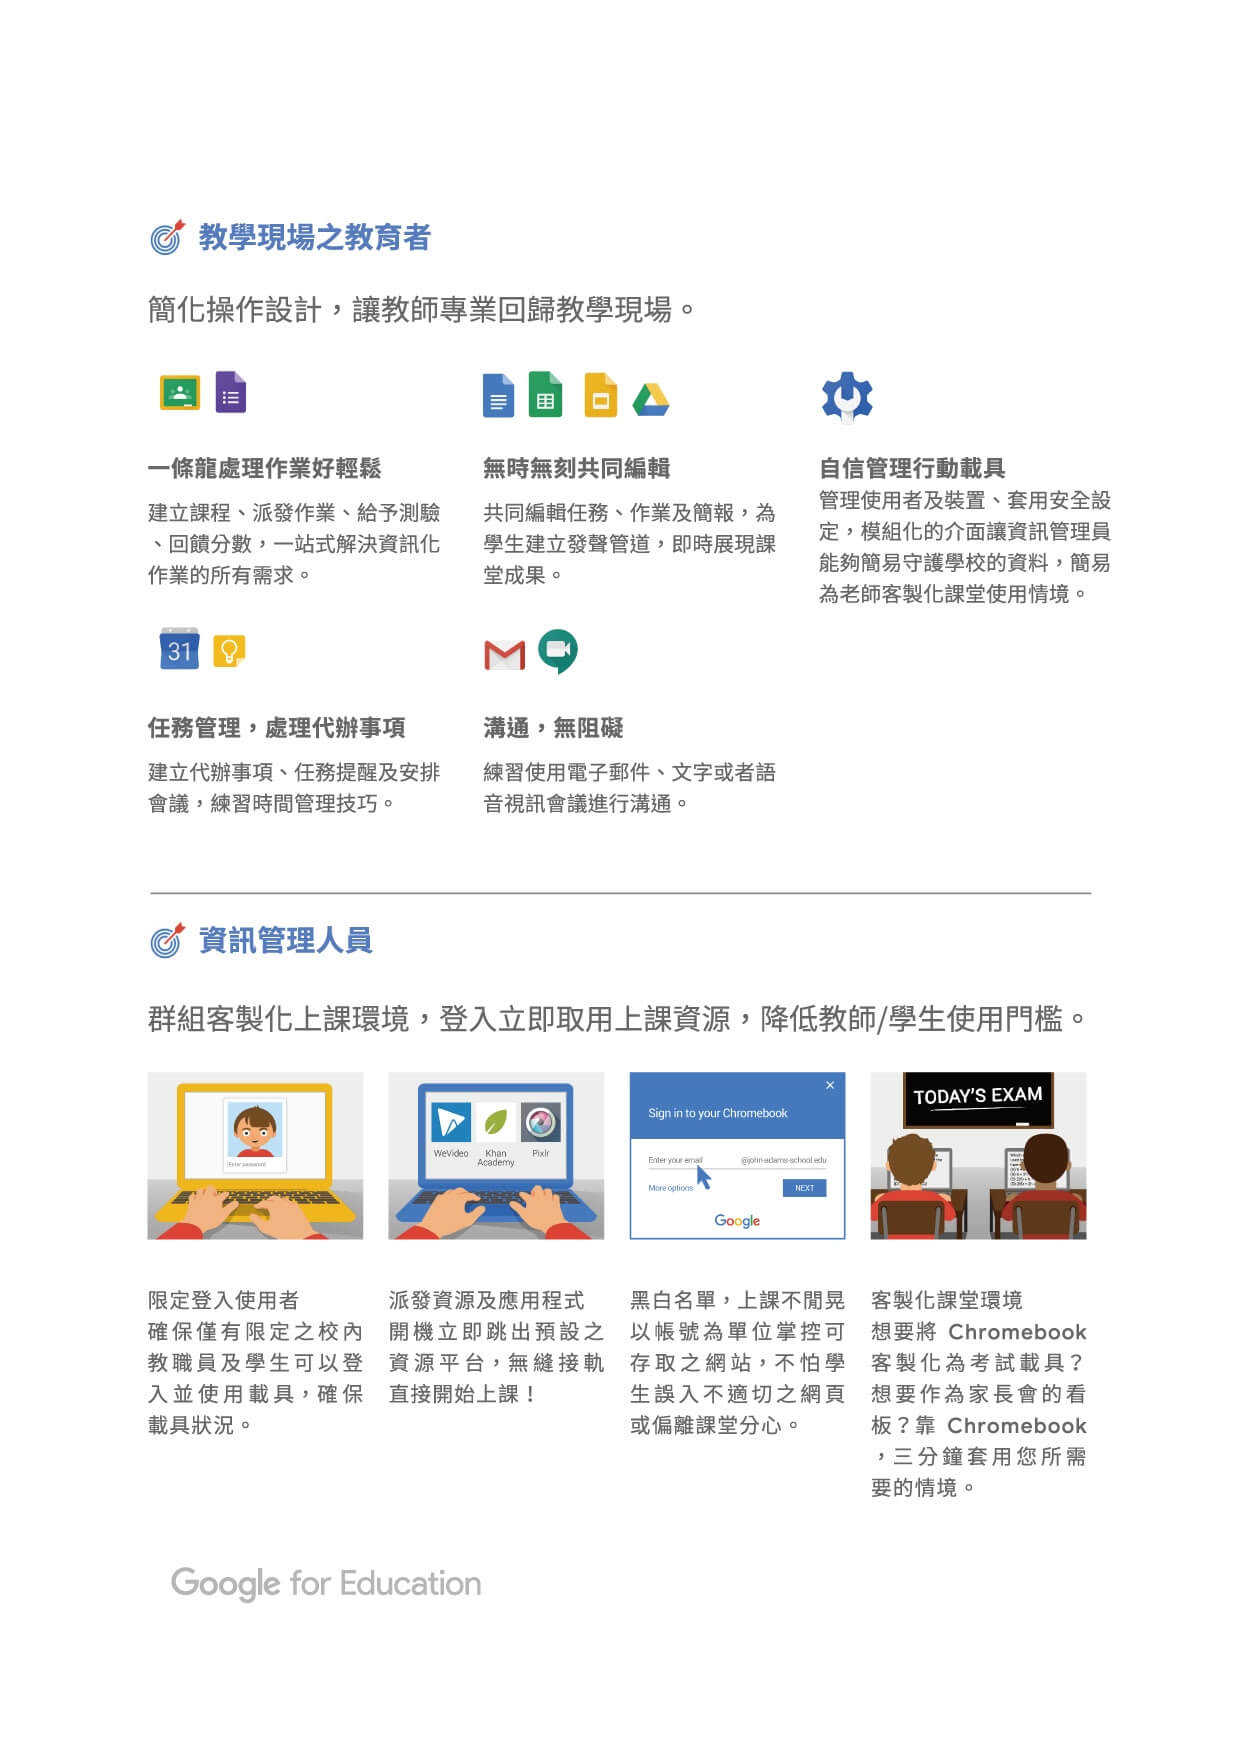 Google for Education/Chromebook/Google 教育/鴻綸科技